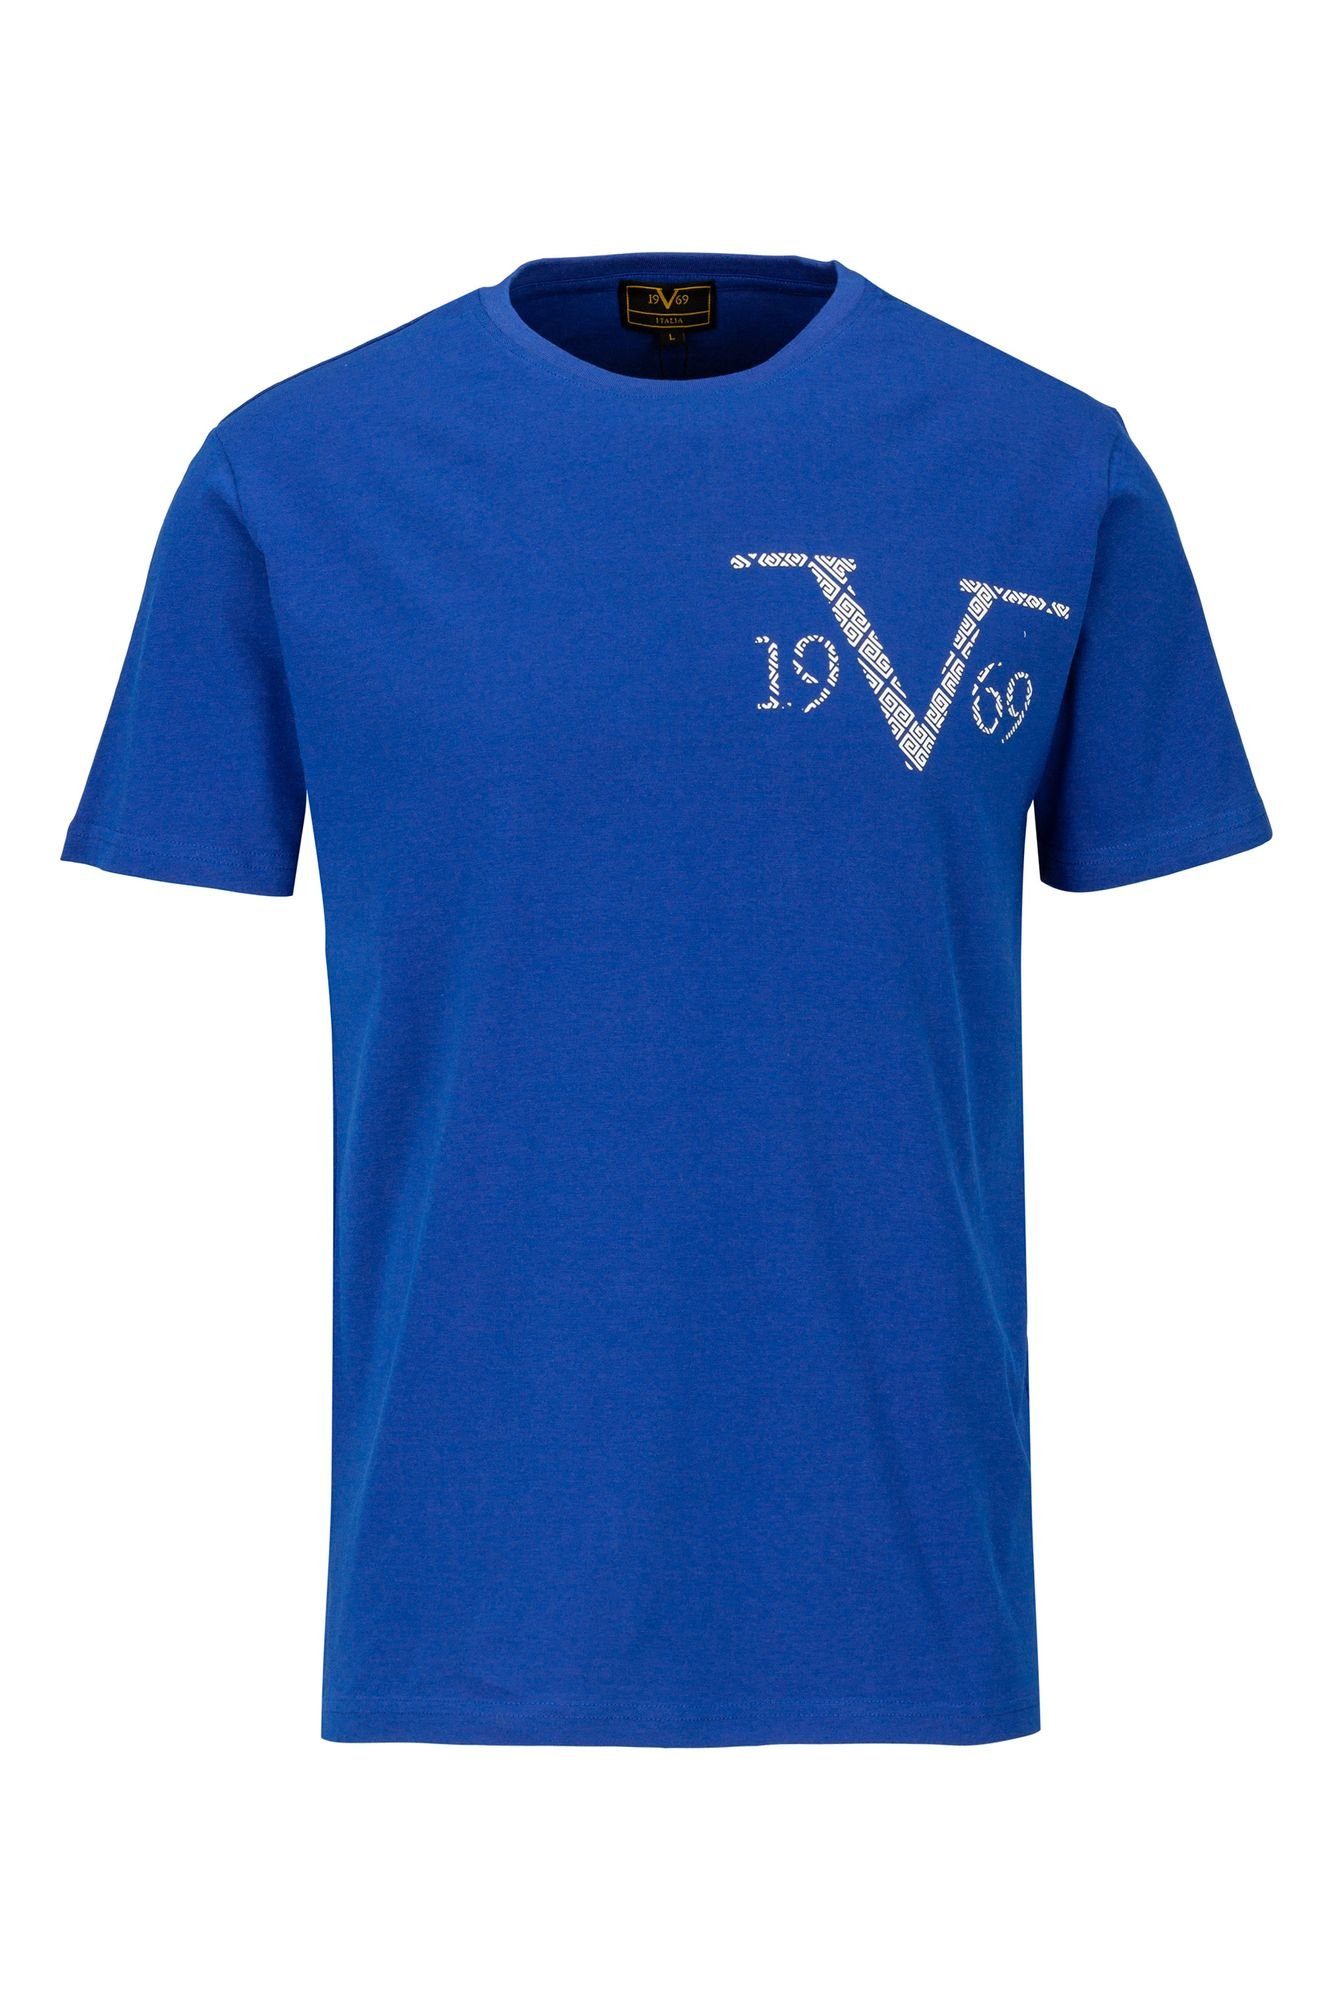 19V69 Versace Italia by Nicolo T-Shirt